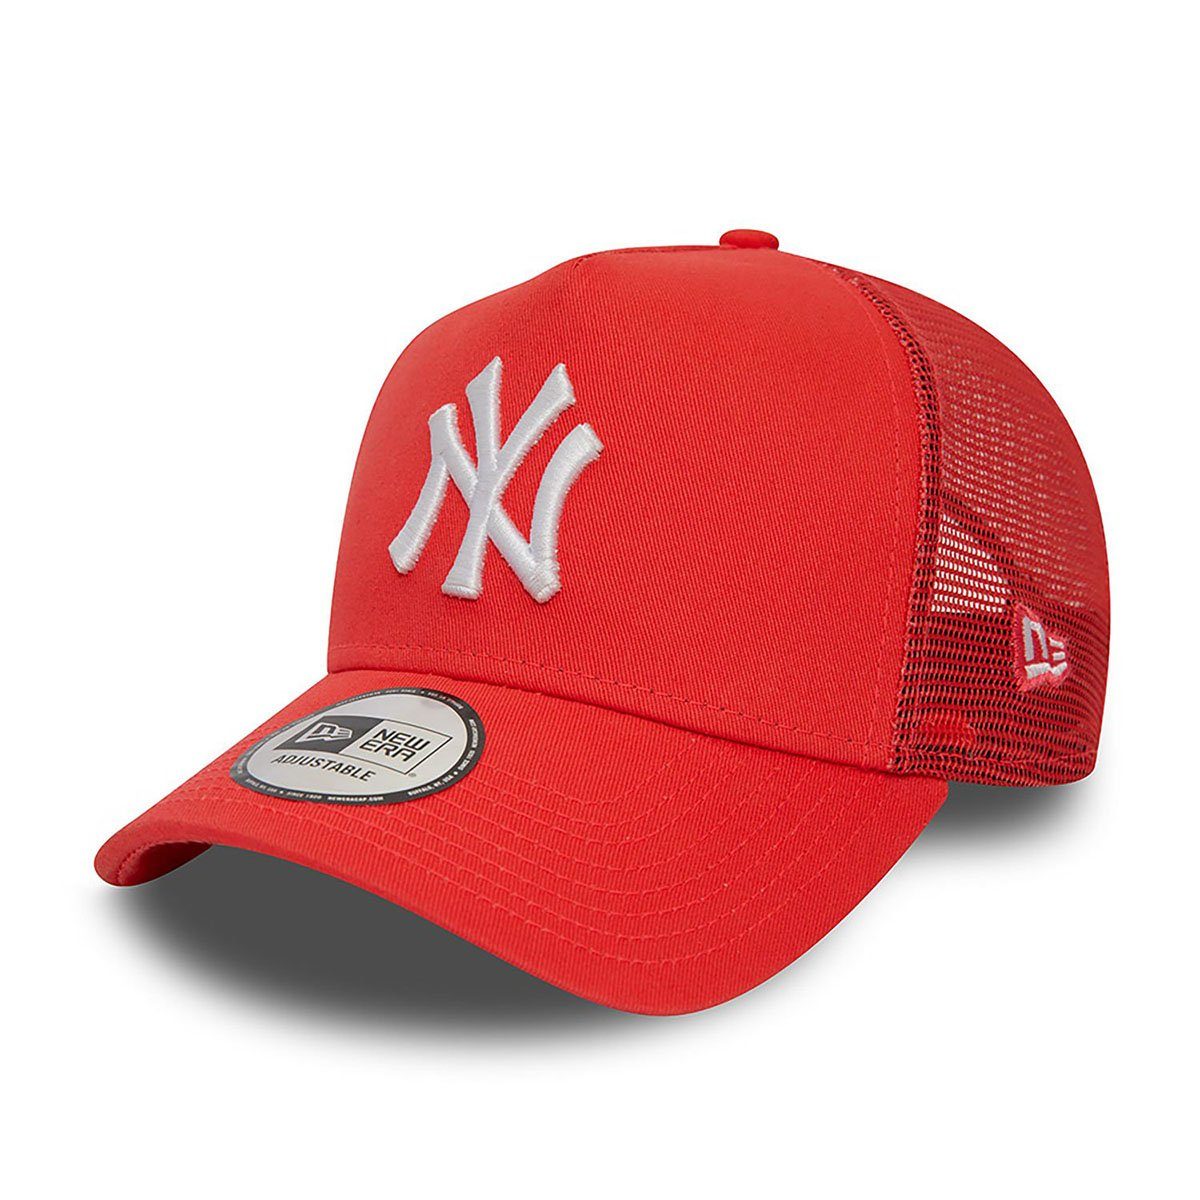 New Era Trucker Cap New York Yankees